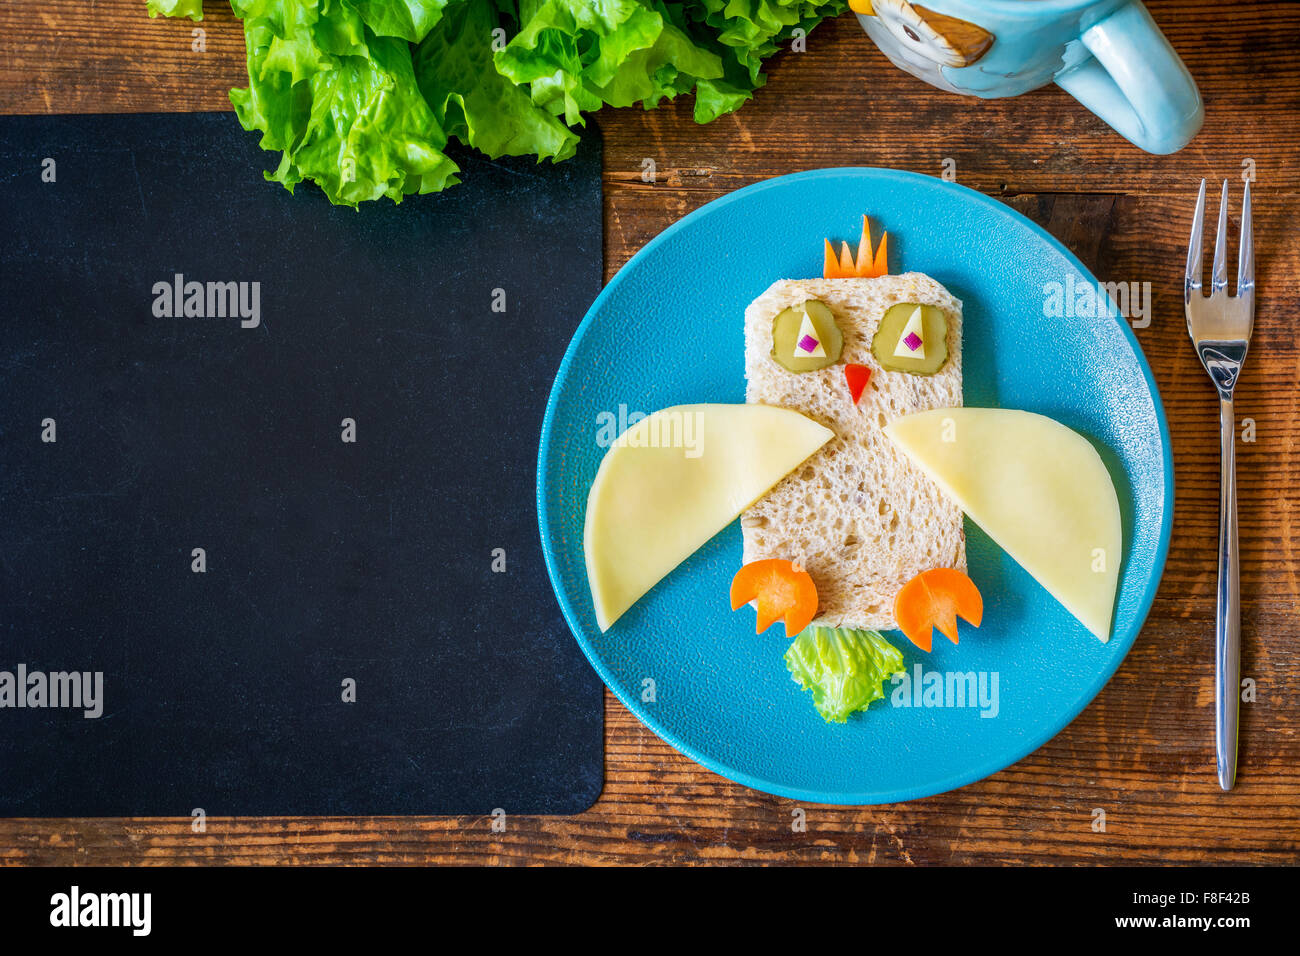 Premium Photo  Owl healthy sandwich, fun lunch box for kids